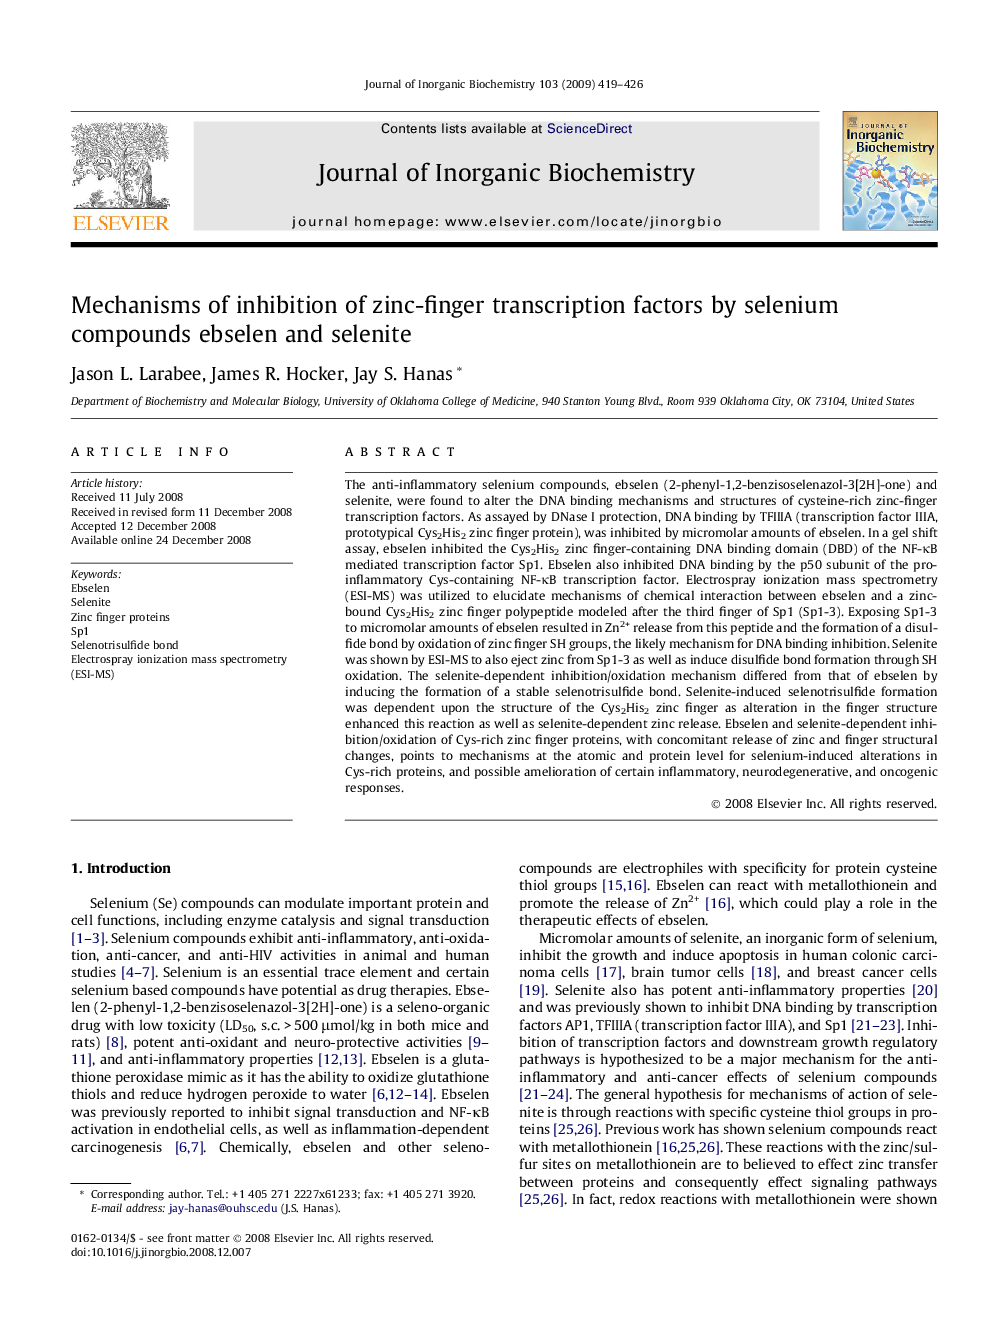 Mechanisms of inhibition of zinc-finger transcription factors by selenium compounds ebselen and selenite